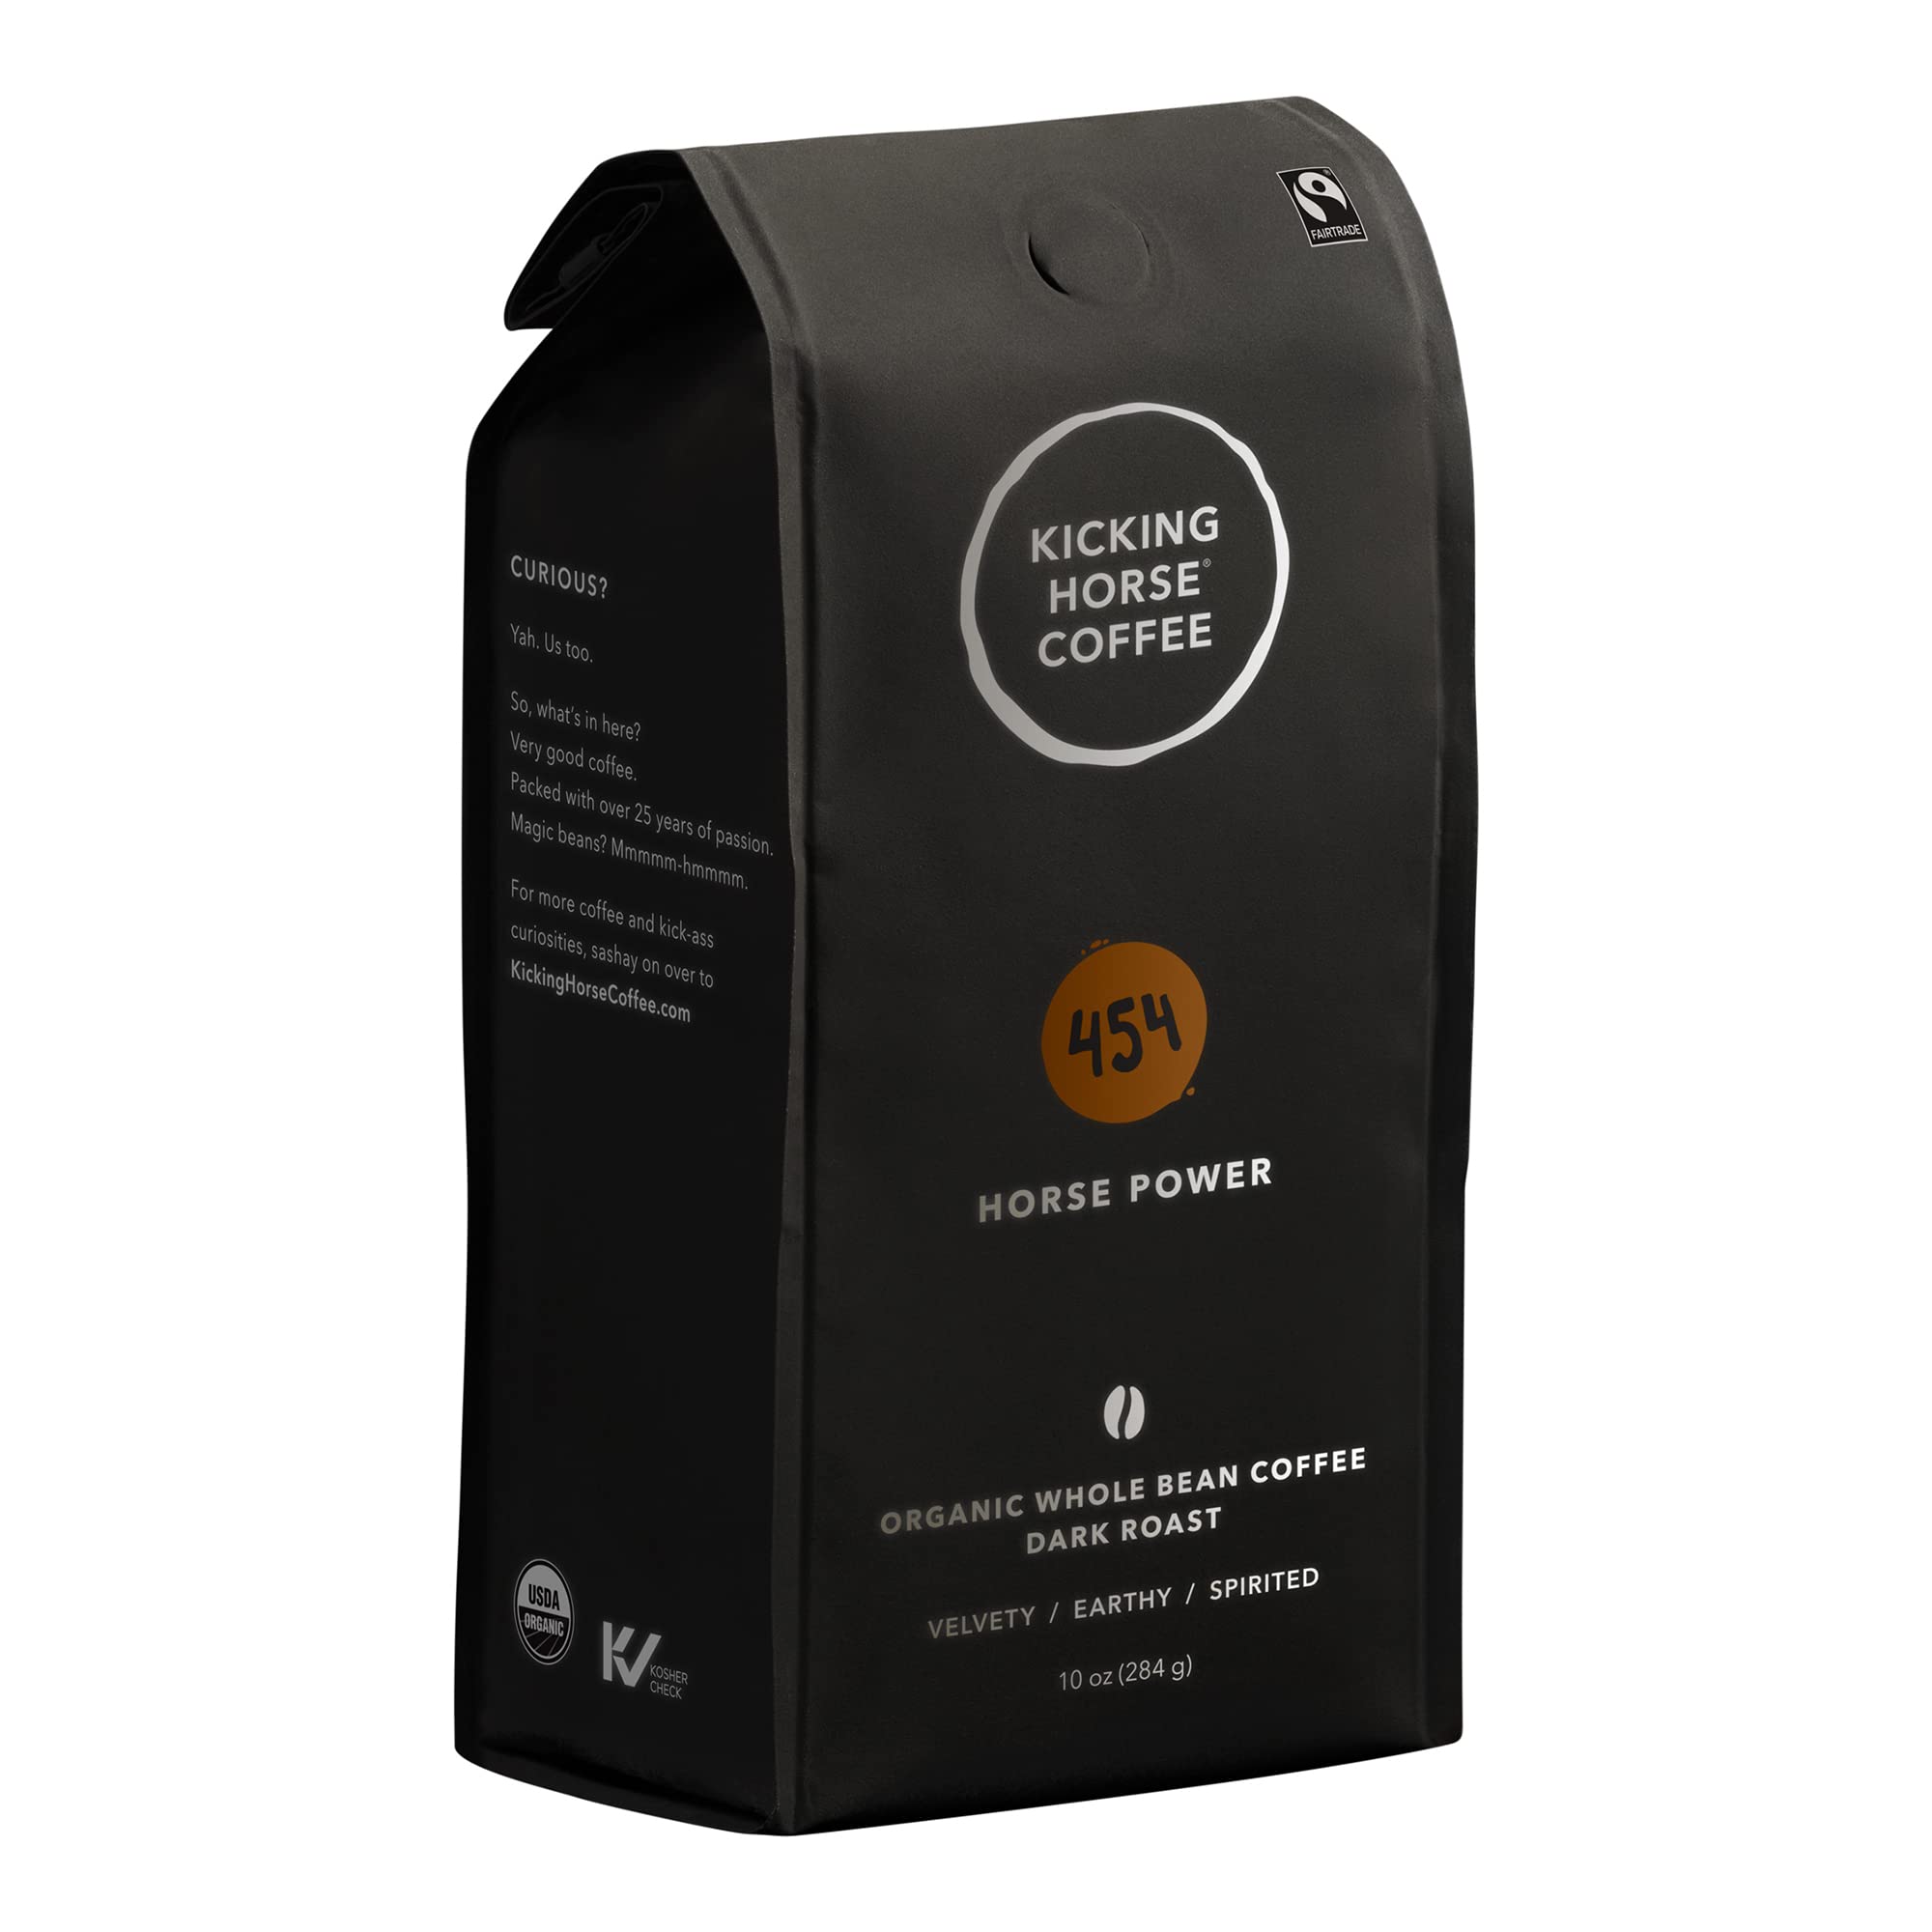 10-Oz Kicking Horse Organic Whole Bean Coffee (454 Horse Power; Dark Roast) $4.84 w/ S&S & More + Free Shipping w/ Prime or $35+